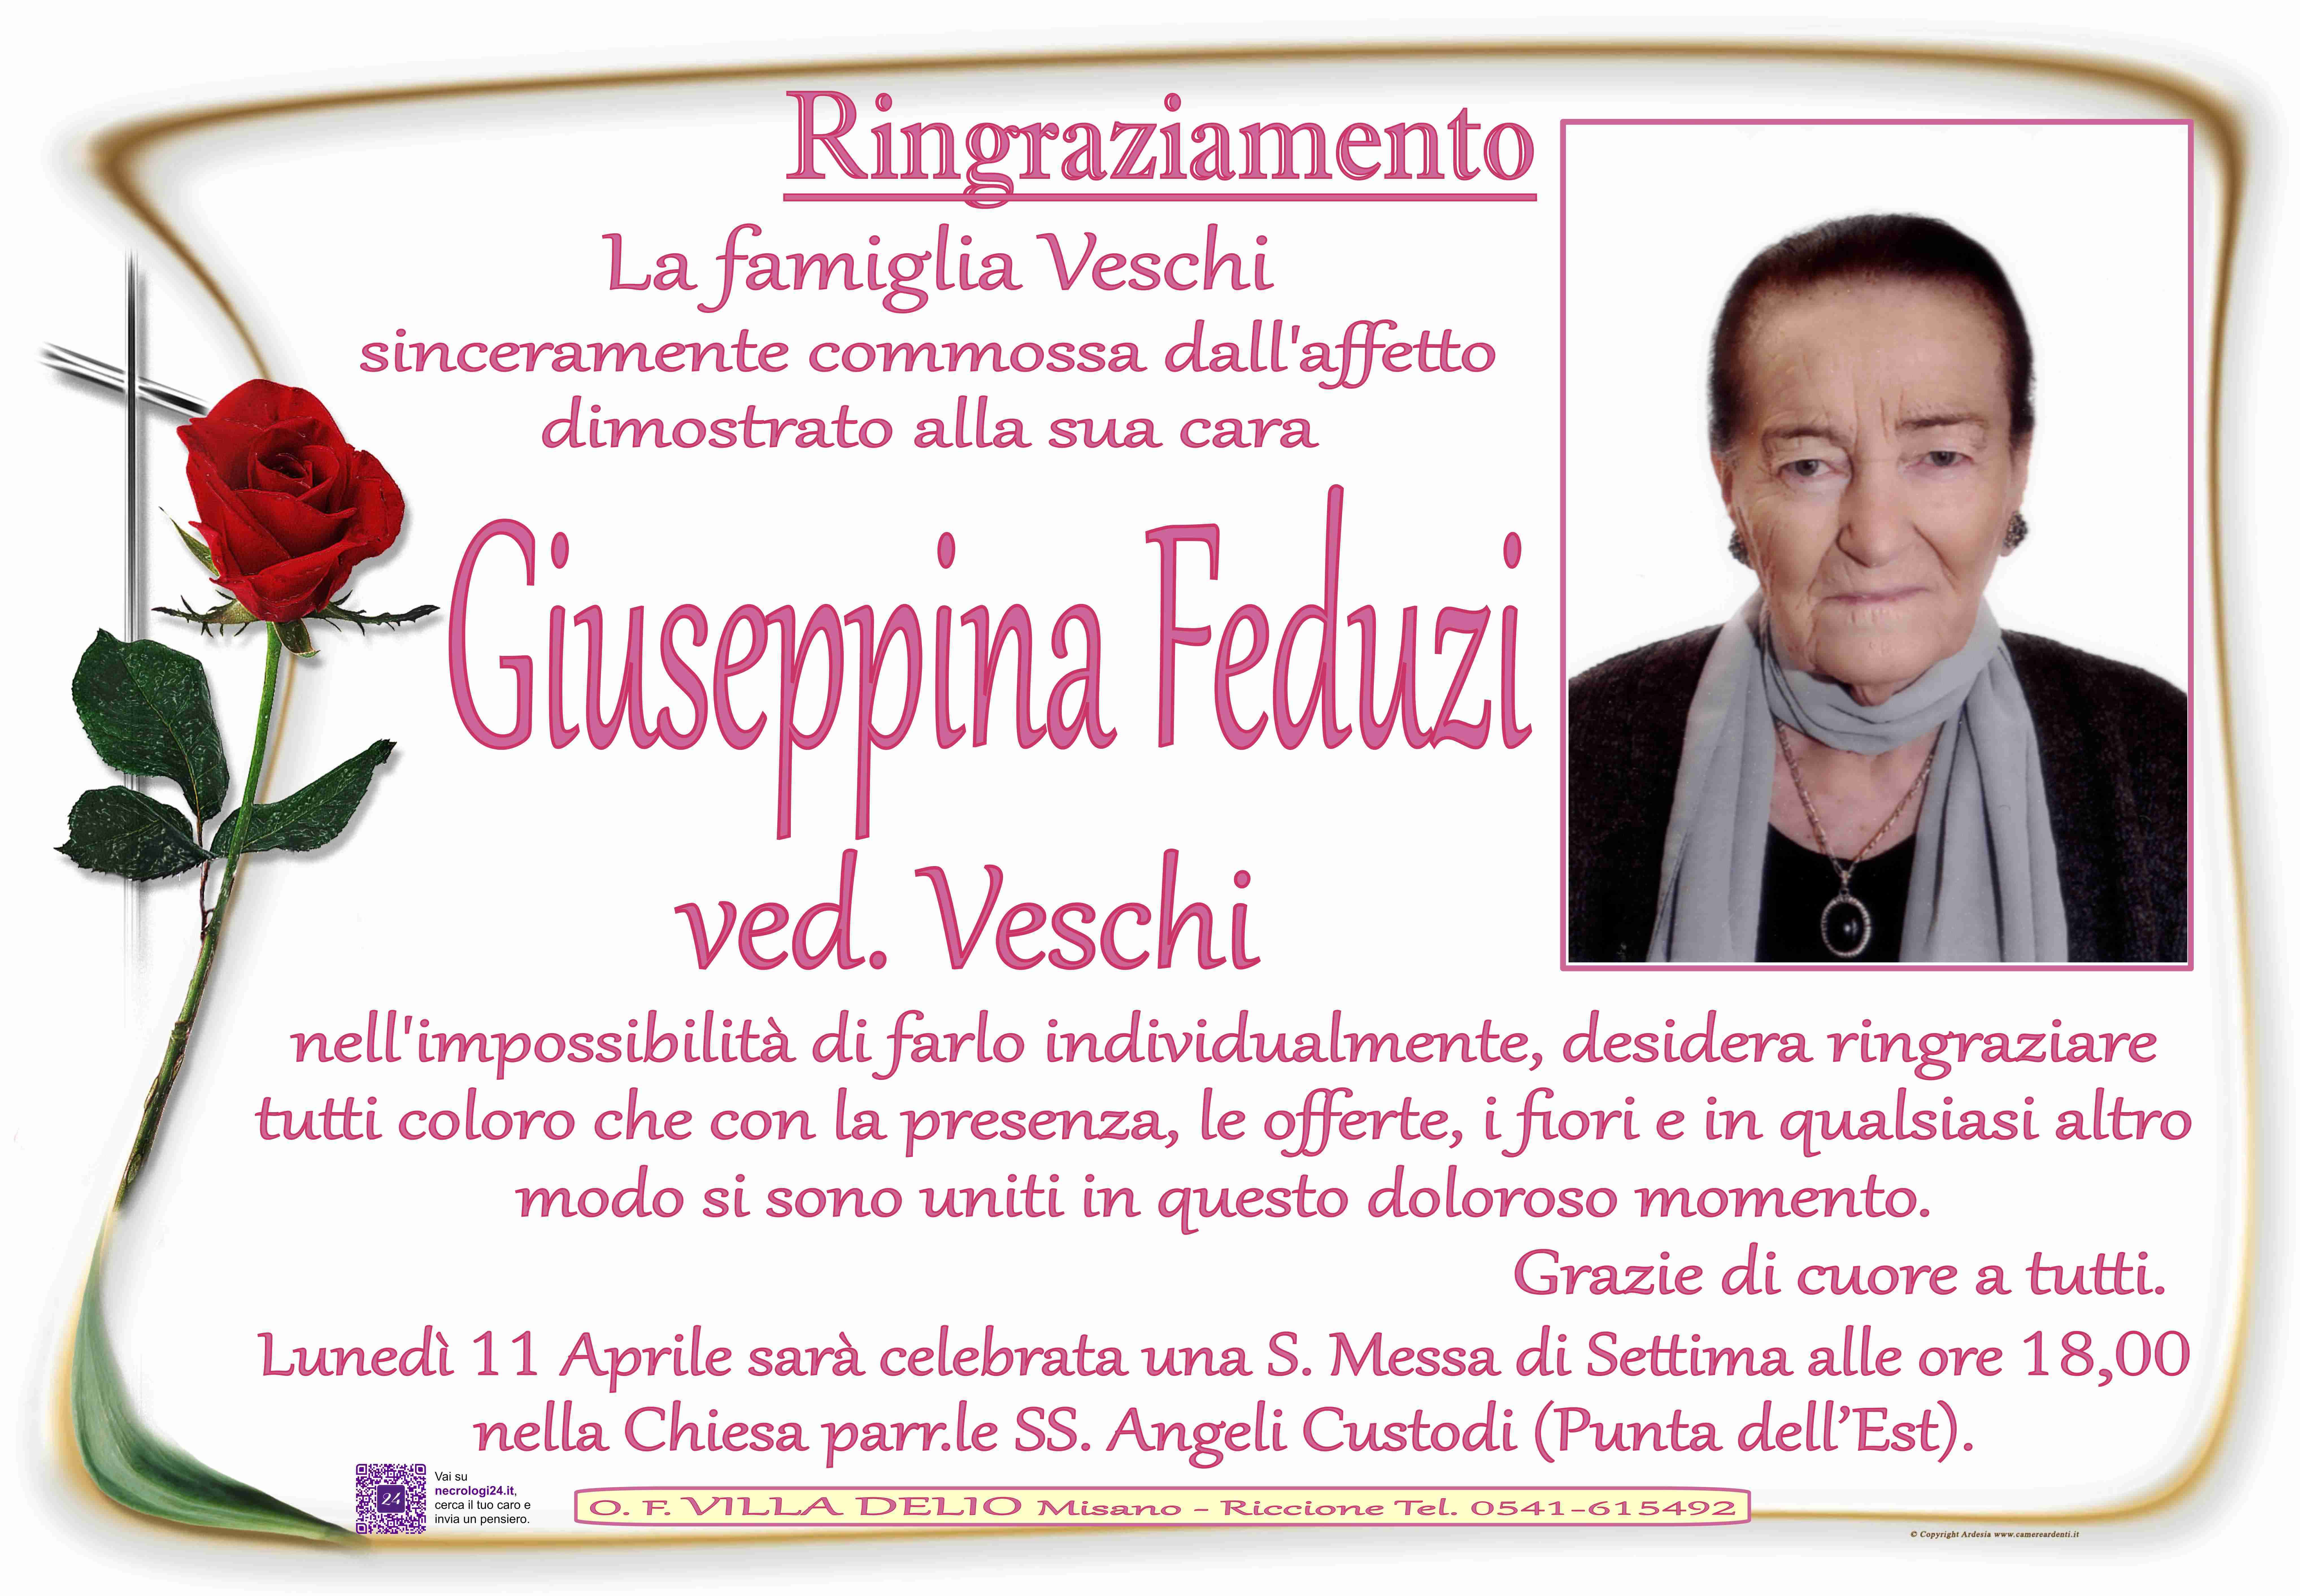 Giuseppina Feduzi